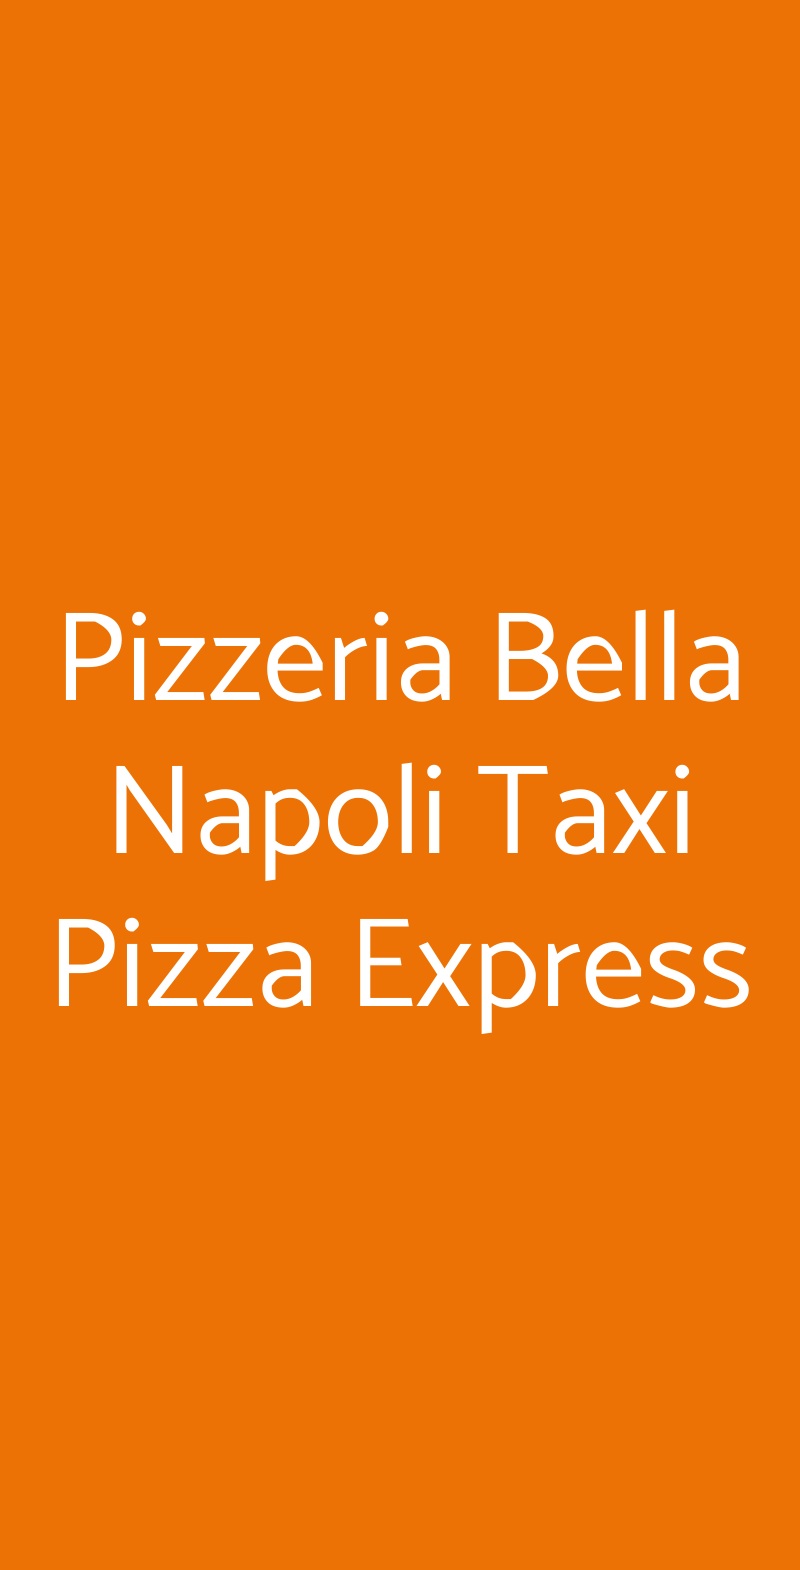 Pizzeria Bella Napoli Taxi Pizza Express Padova menù 1 pagina